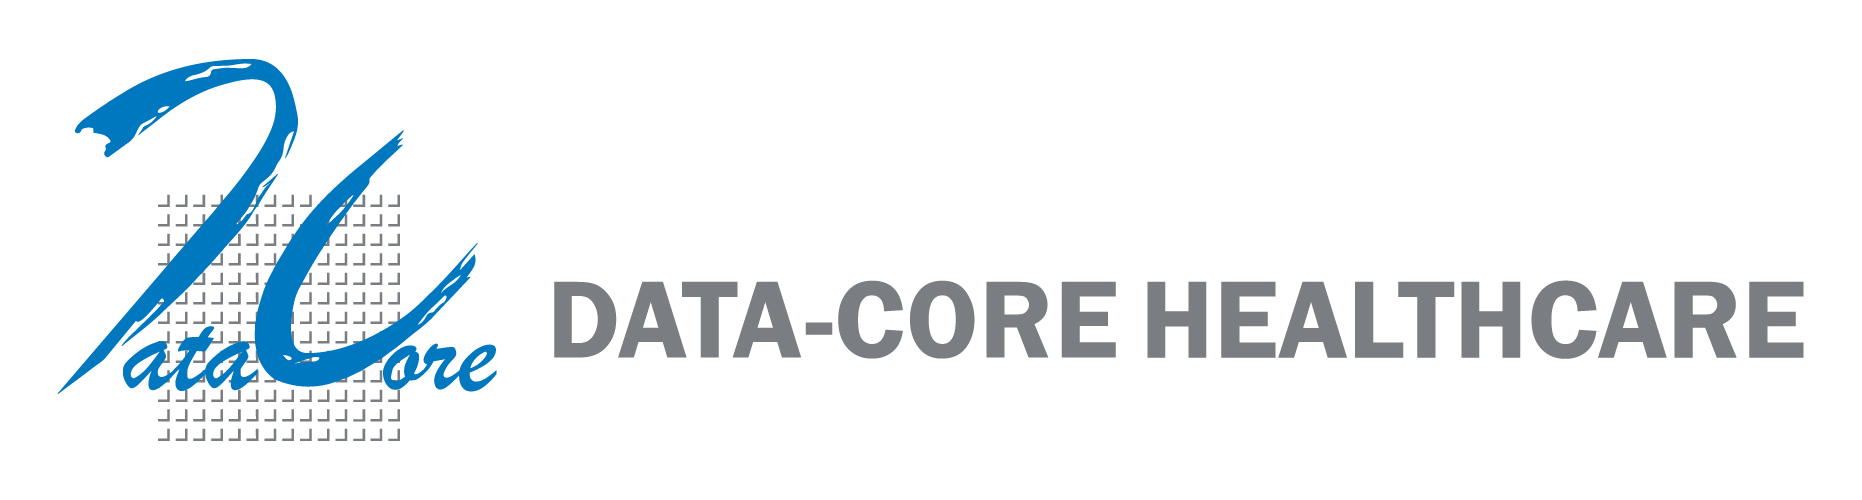 Data-Core Healthcare Logo.